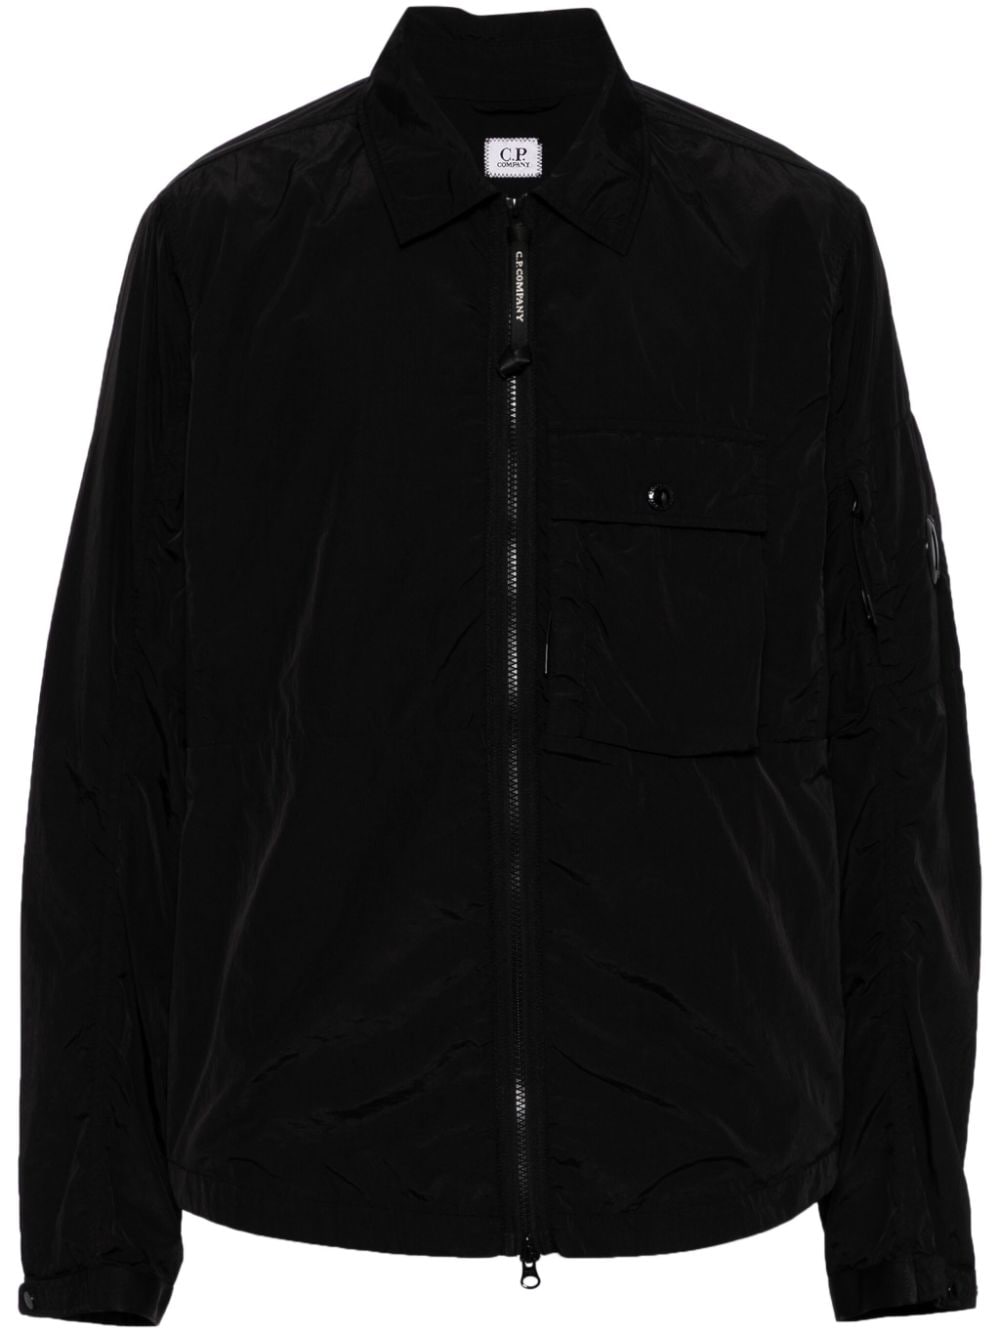 C.P. Company lightweight long-sleeve jacket - Black von C.P. Company